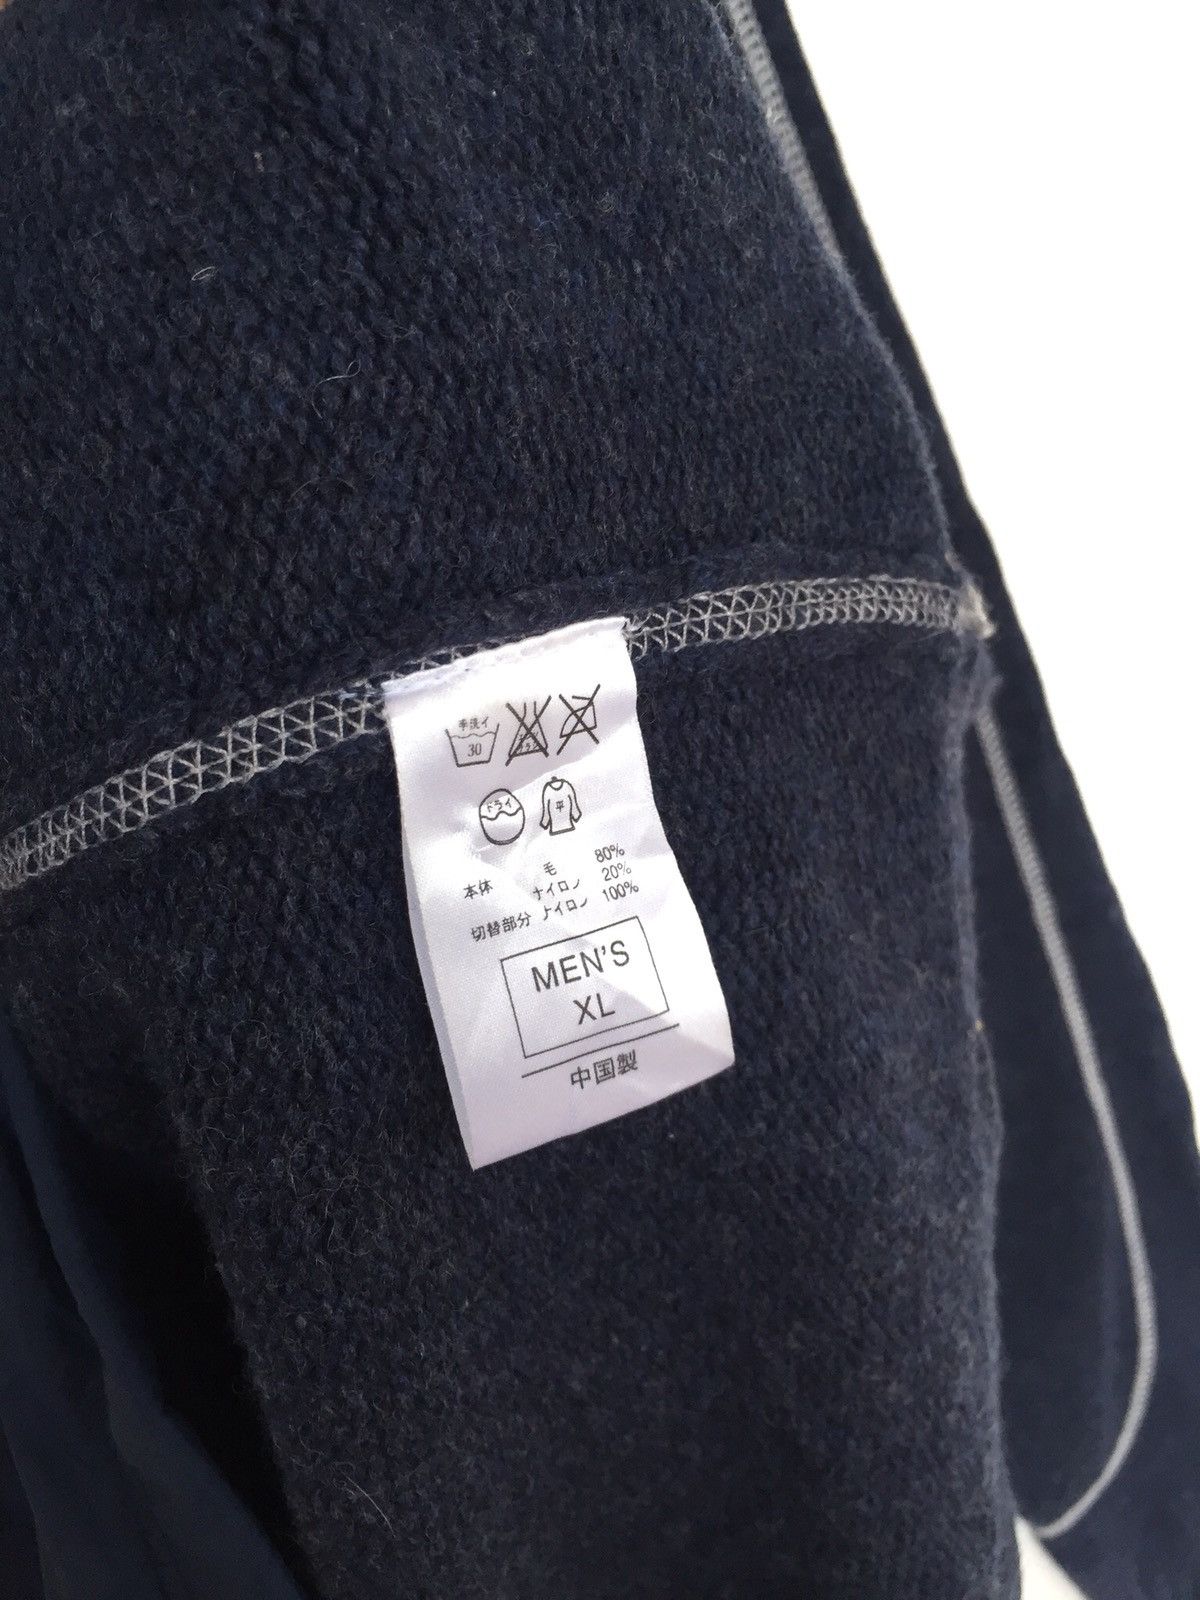 Nike Y2K Nike ACG Hybrid Half Zipper OS Sweater Jacket Size US L / EU 52-54 / 3 - 7 Preview